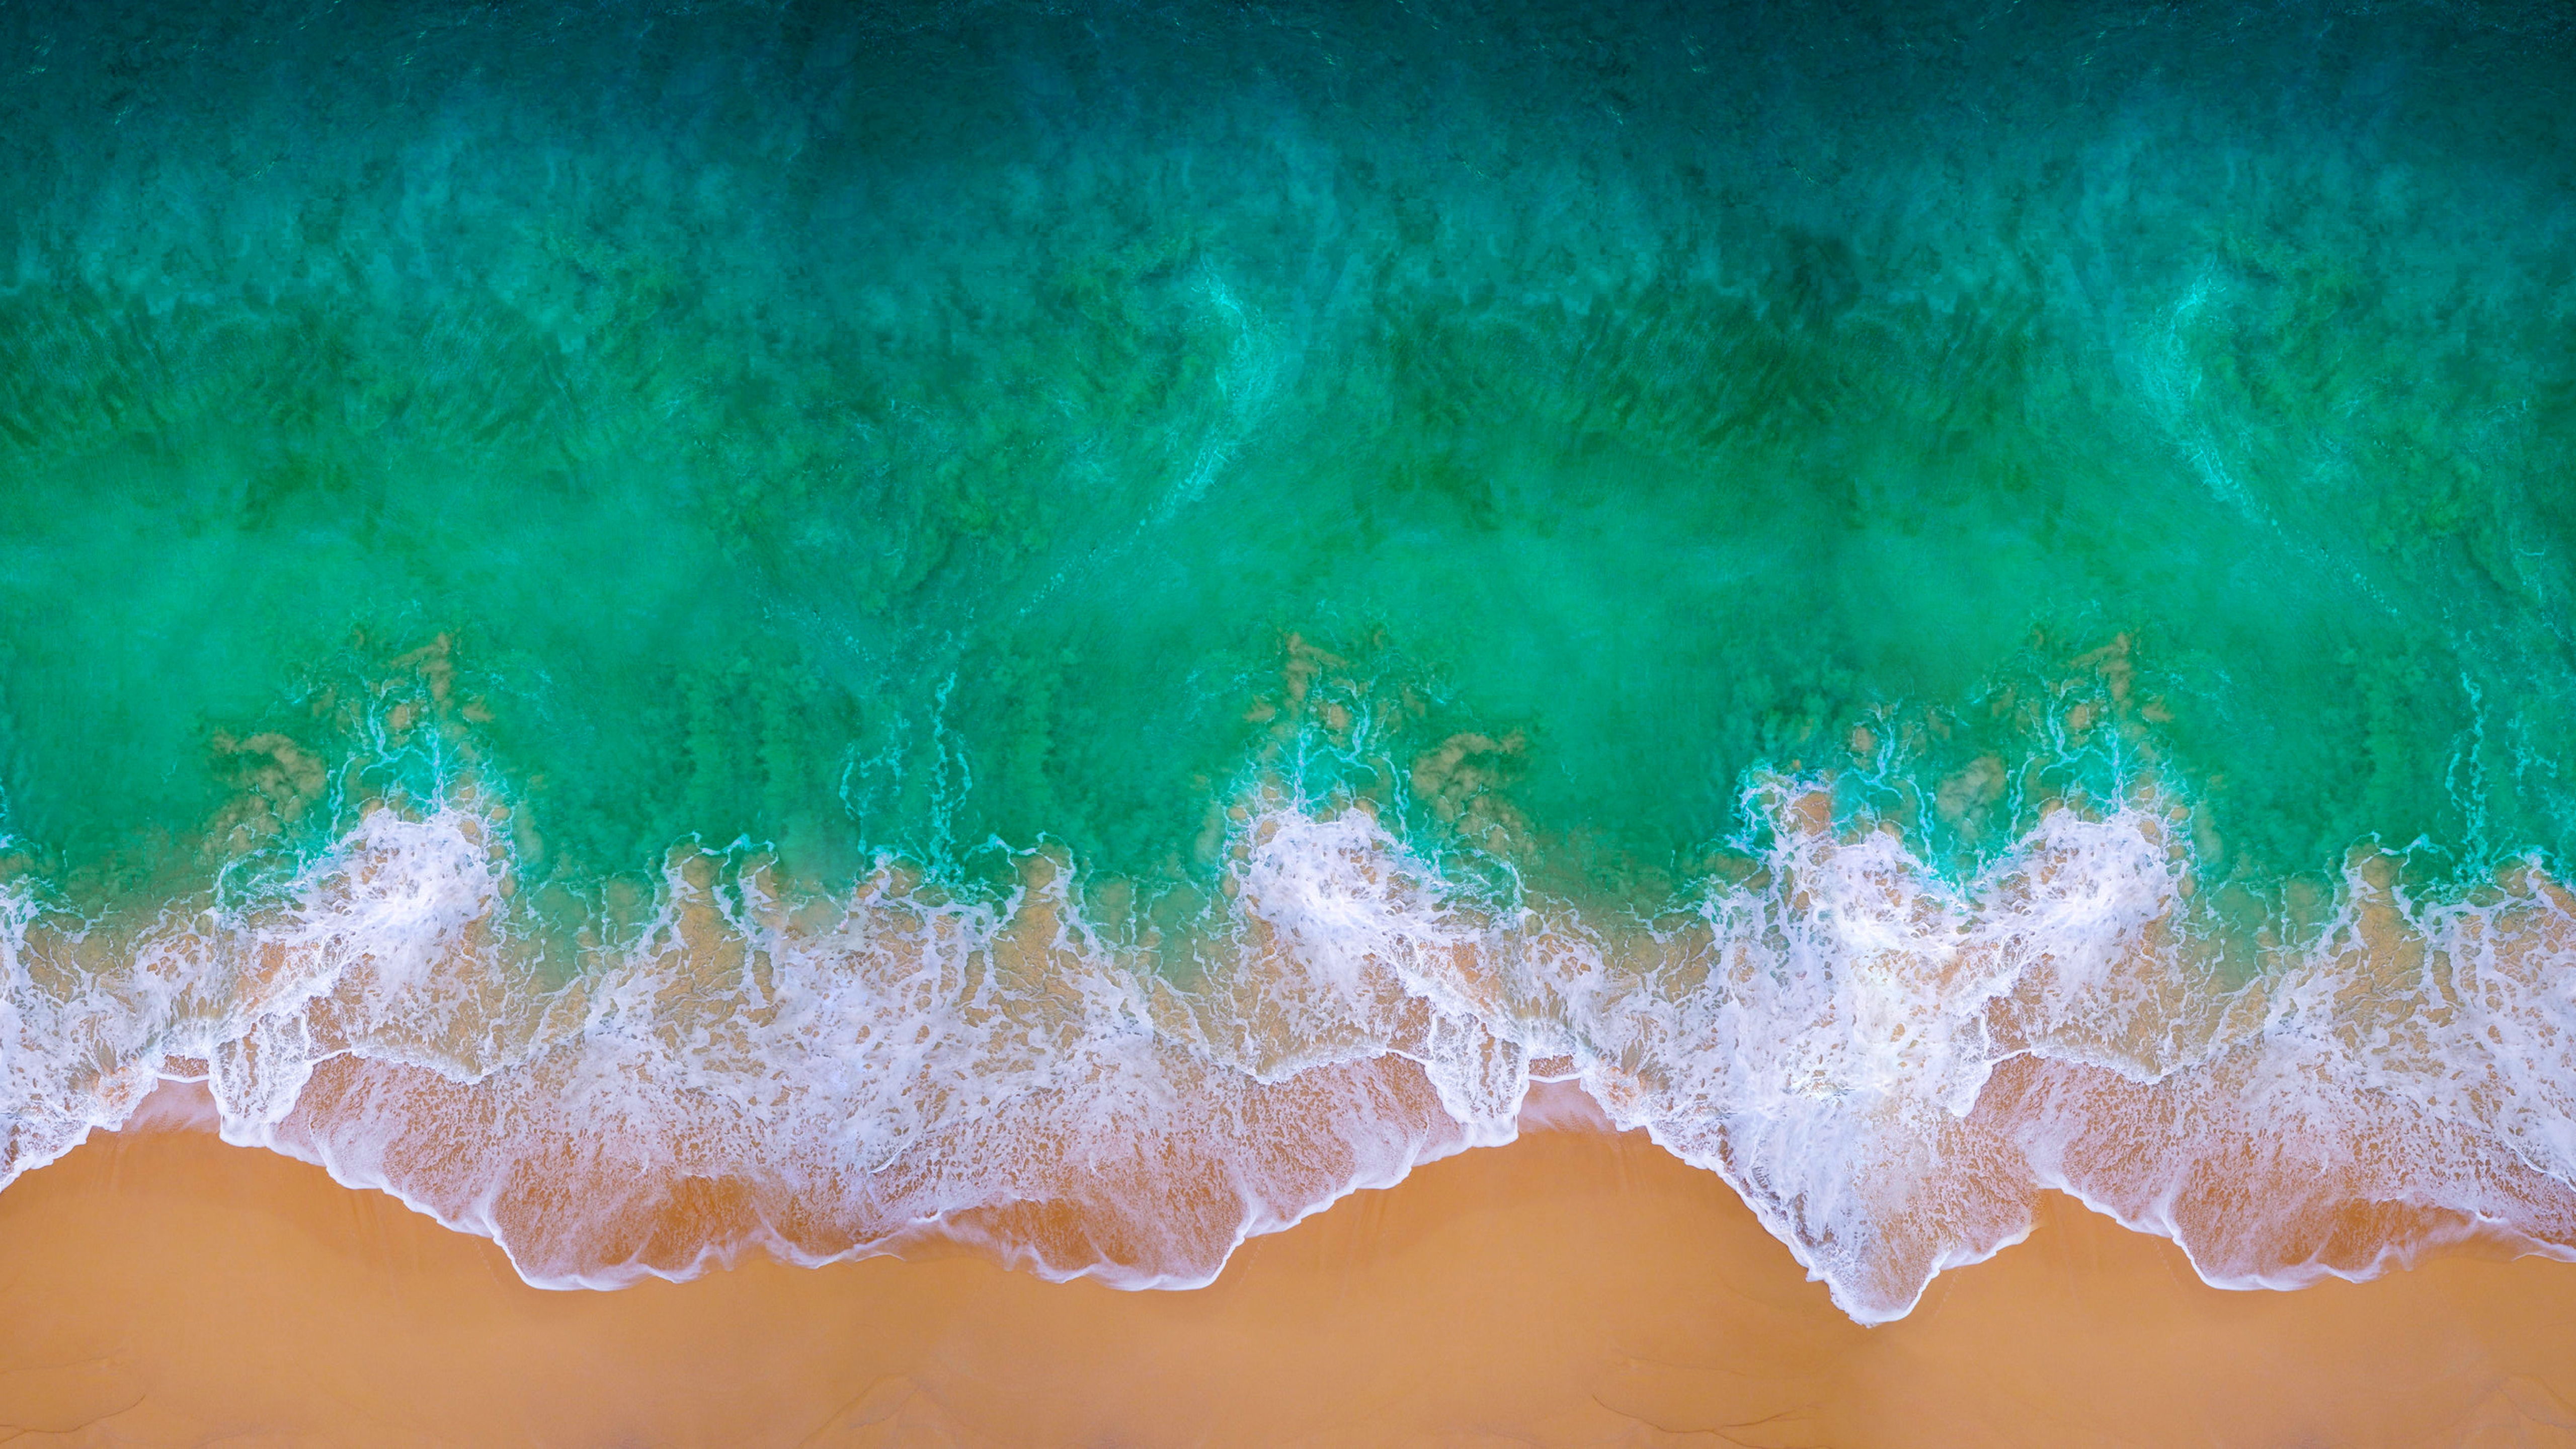 HD wallpaper, Waves, Shore, Aerial View, Waterscape, Beach, Macbook Pro, Digital Art, Apple Imac, Ios 11, 5K, Mac Os, Ocean